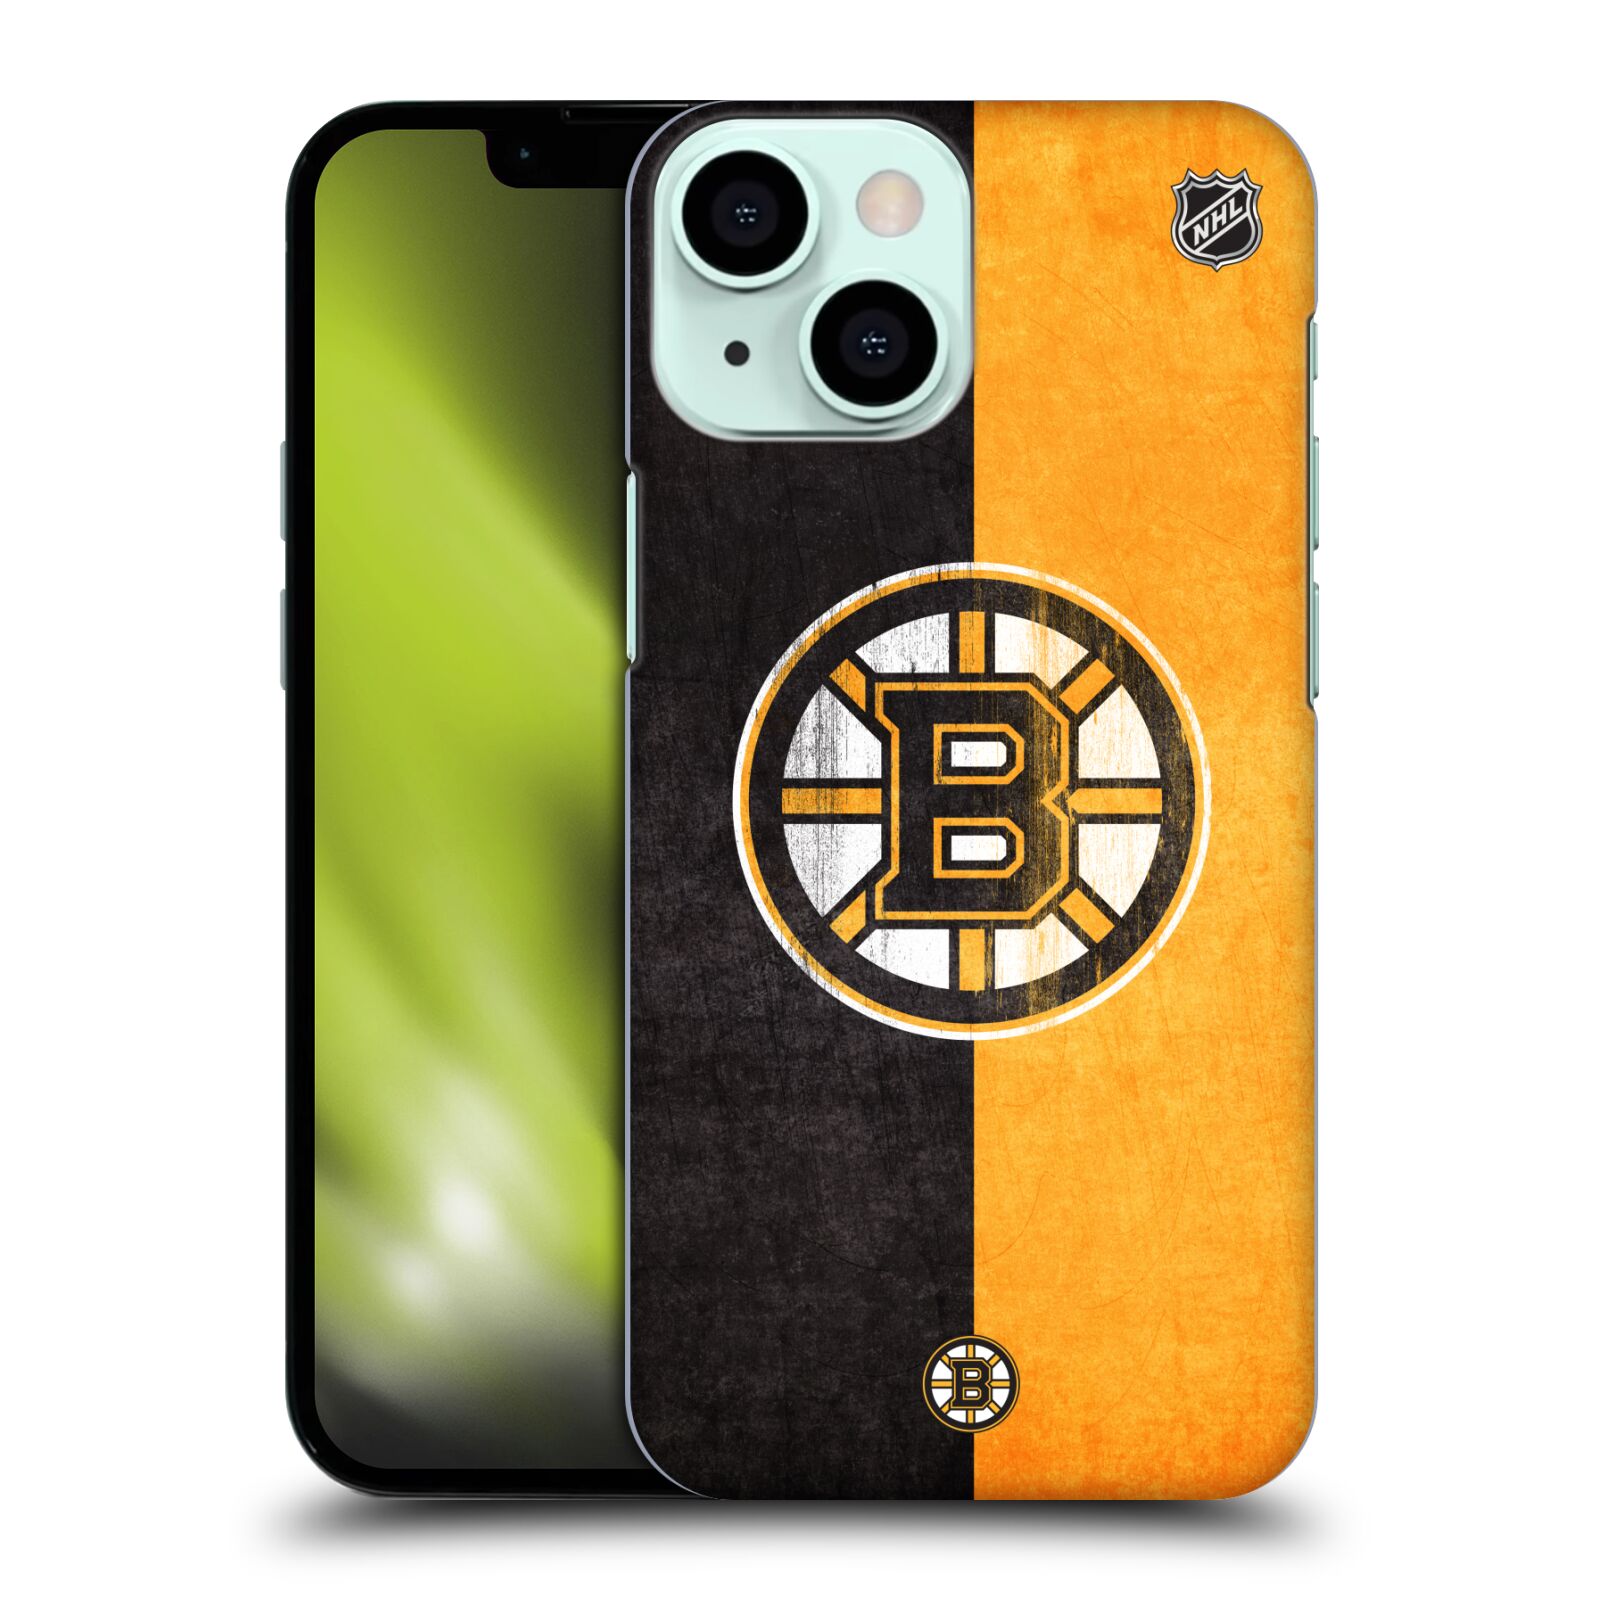 Plastové pouzdro na mobil Apple iPhone 13 Mini - NHL - Půlené logo Boston Bruins (Plastový kryt, pouzdro, obal na mobilní telefon Apple iPhone 13 Mini s licencovaným motivem NHL - Půlené logo Boston Bruins)